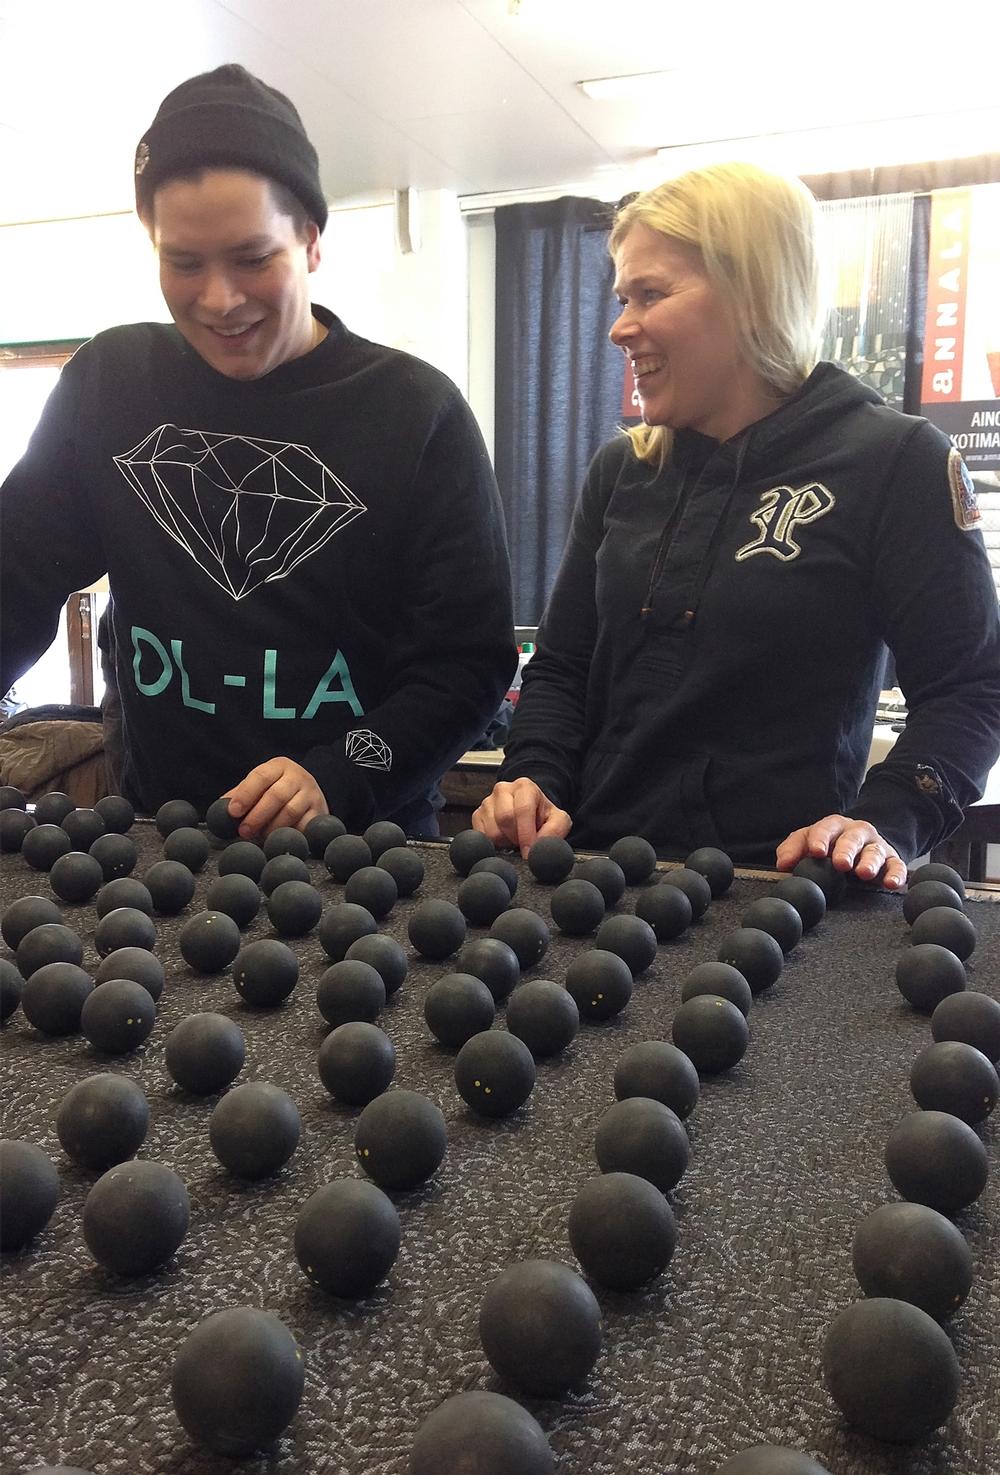 Hukka members get through more than 2,500 squash balls each year